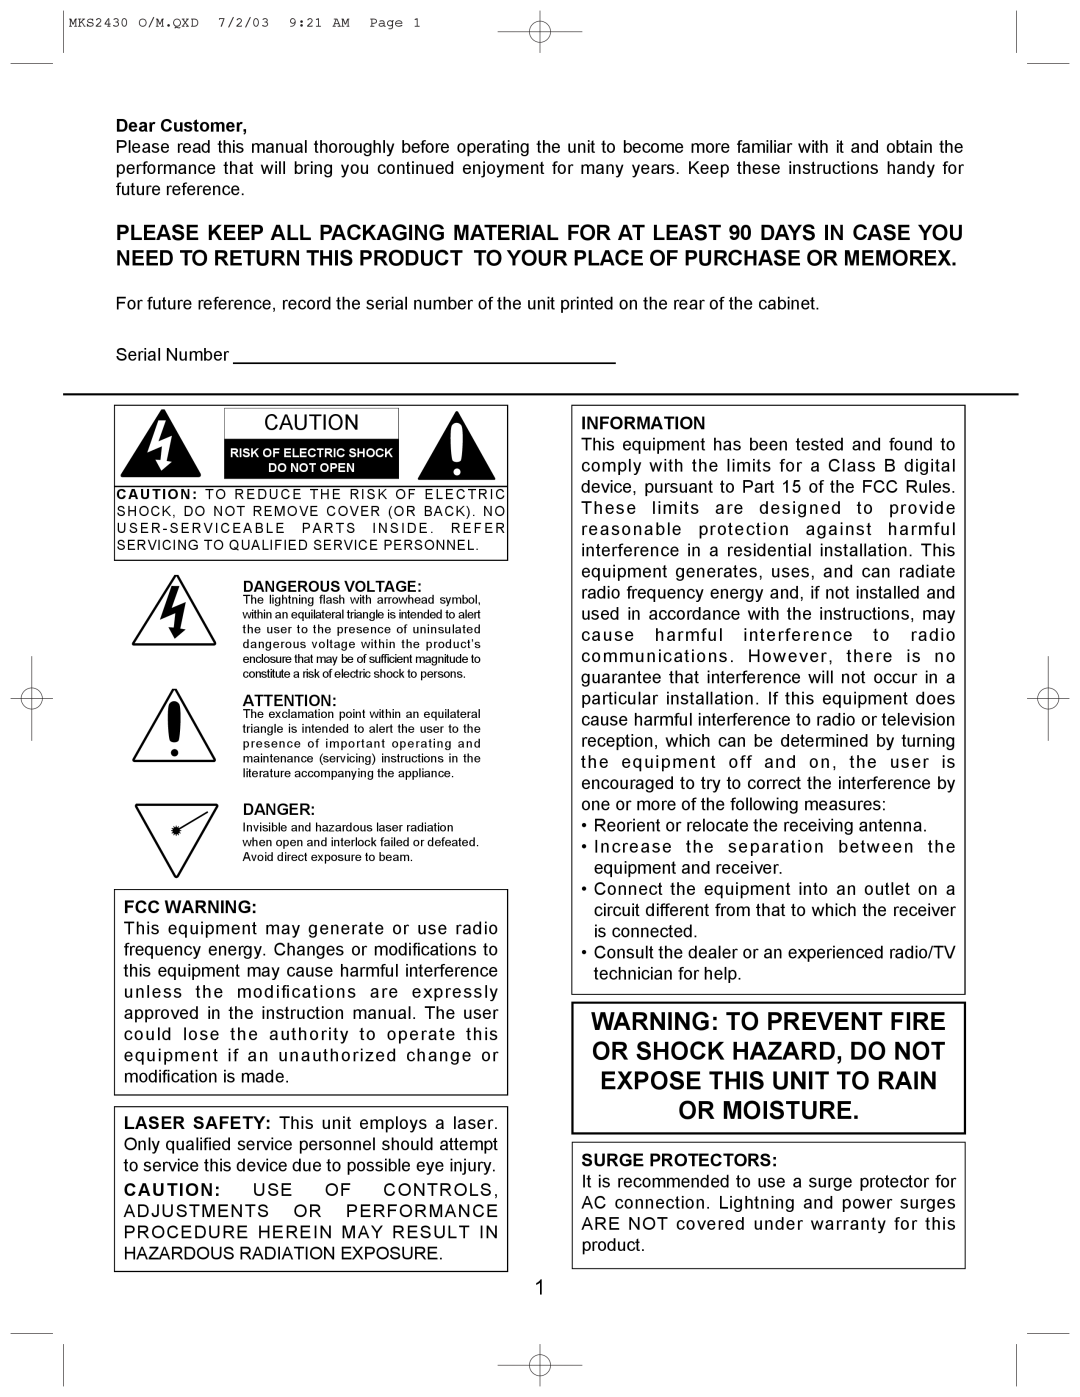 Memorex MKS2430 manual Dear Customer, Fcc Warning, Information, Surge Protectors 